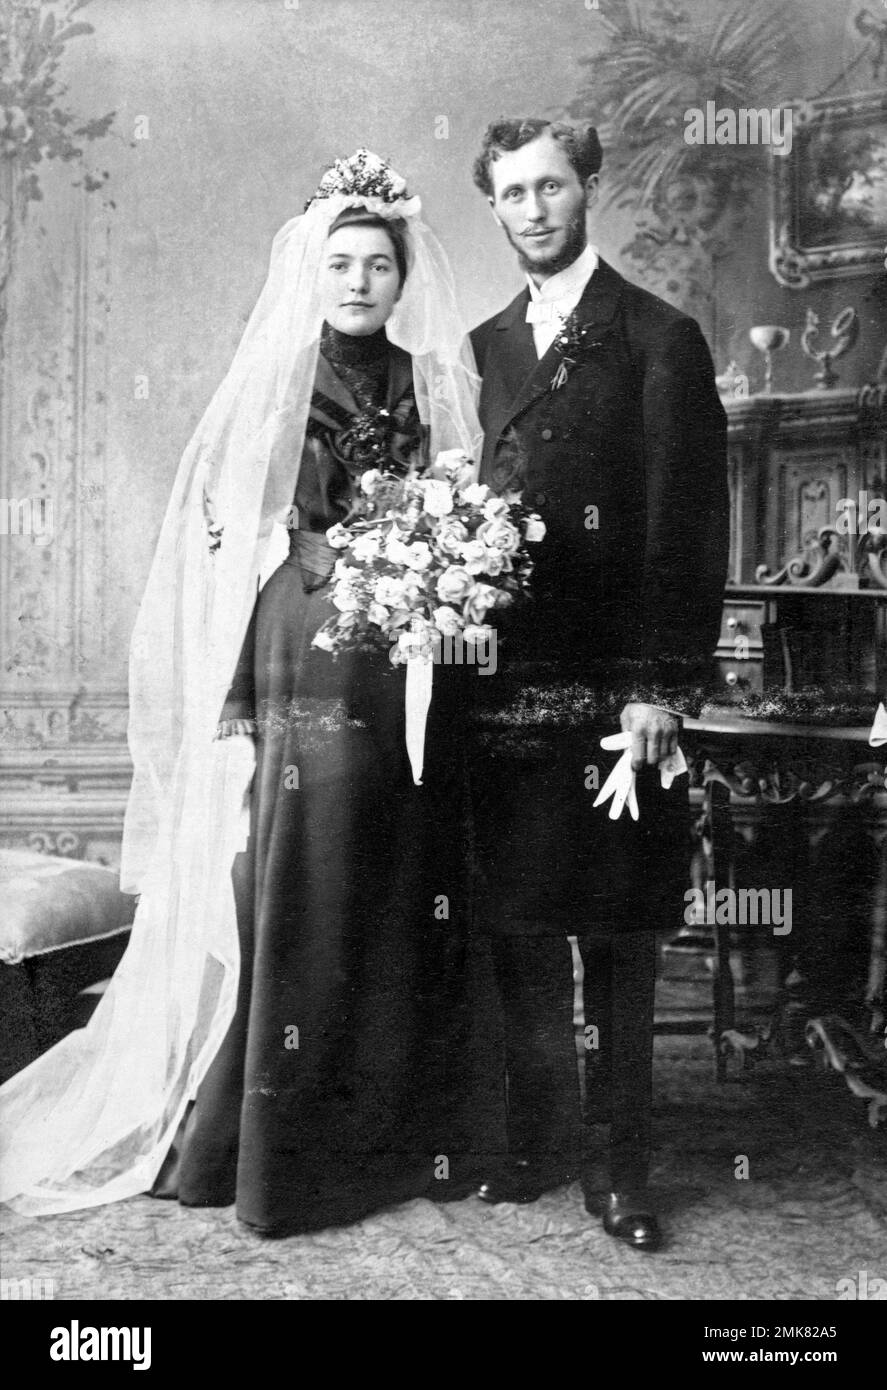 Brautpaar, c. 1905, Deutschland Stockfoto